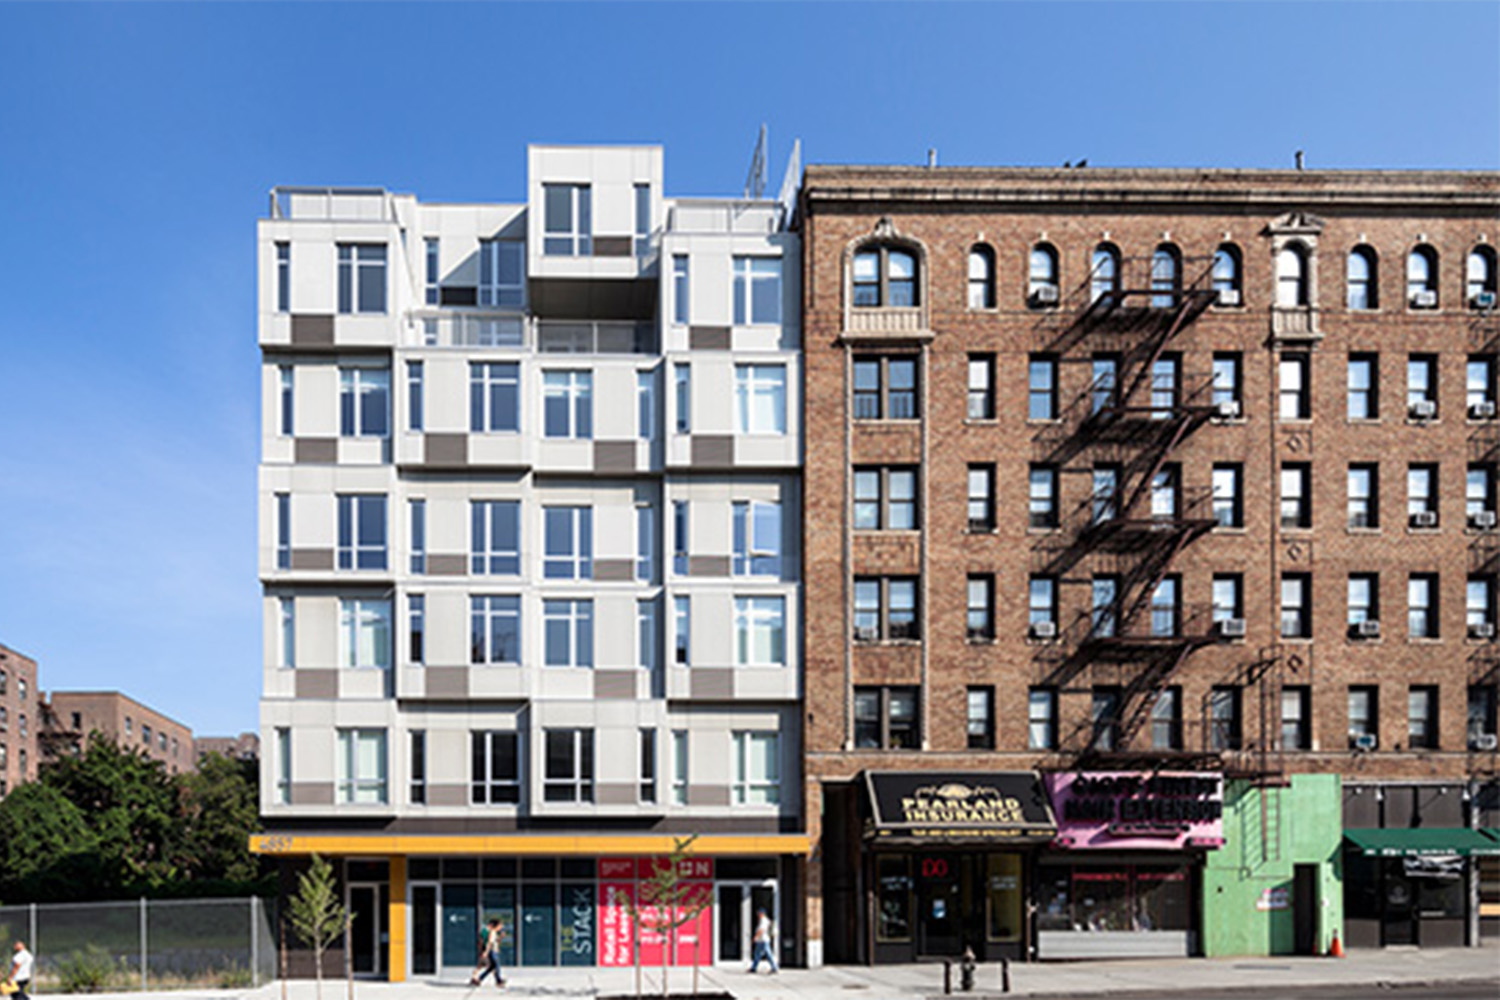 housing in NYC, half brick, half white wood 